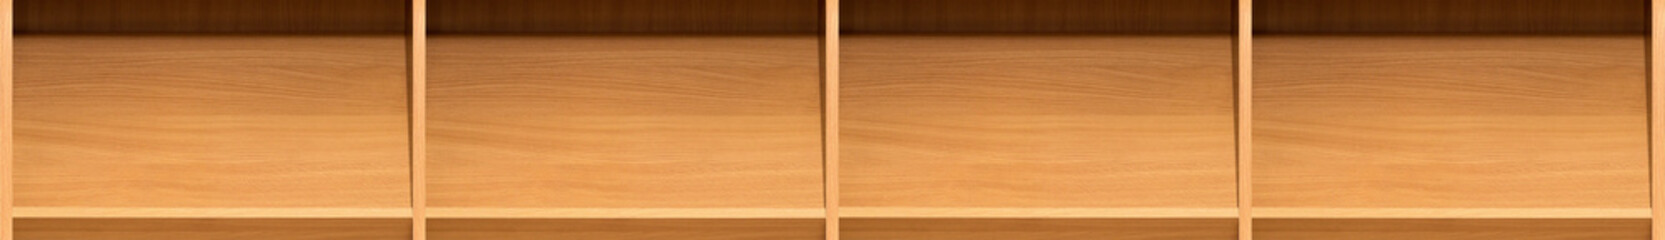 group of shelves 4*1, seamless